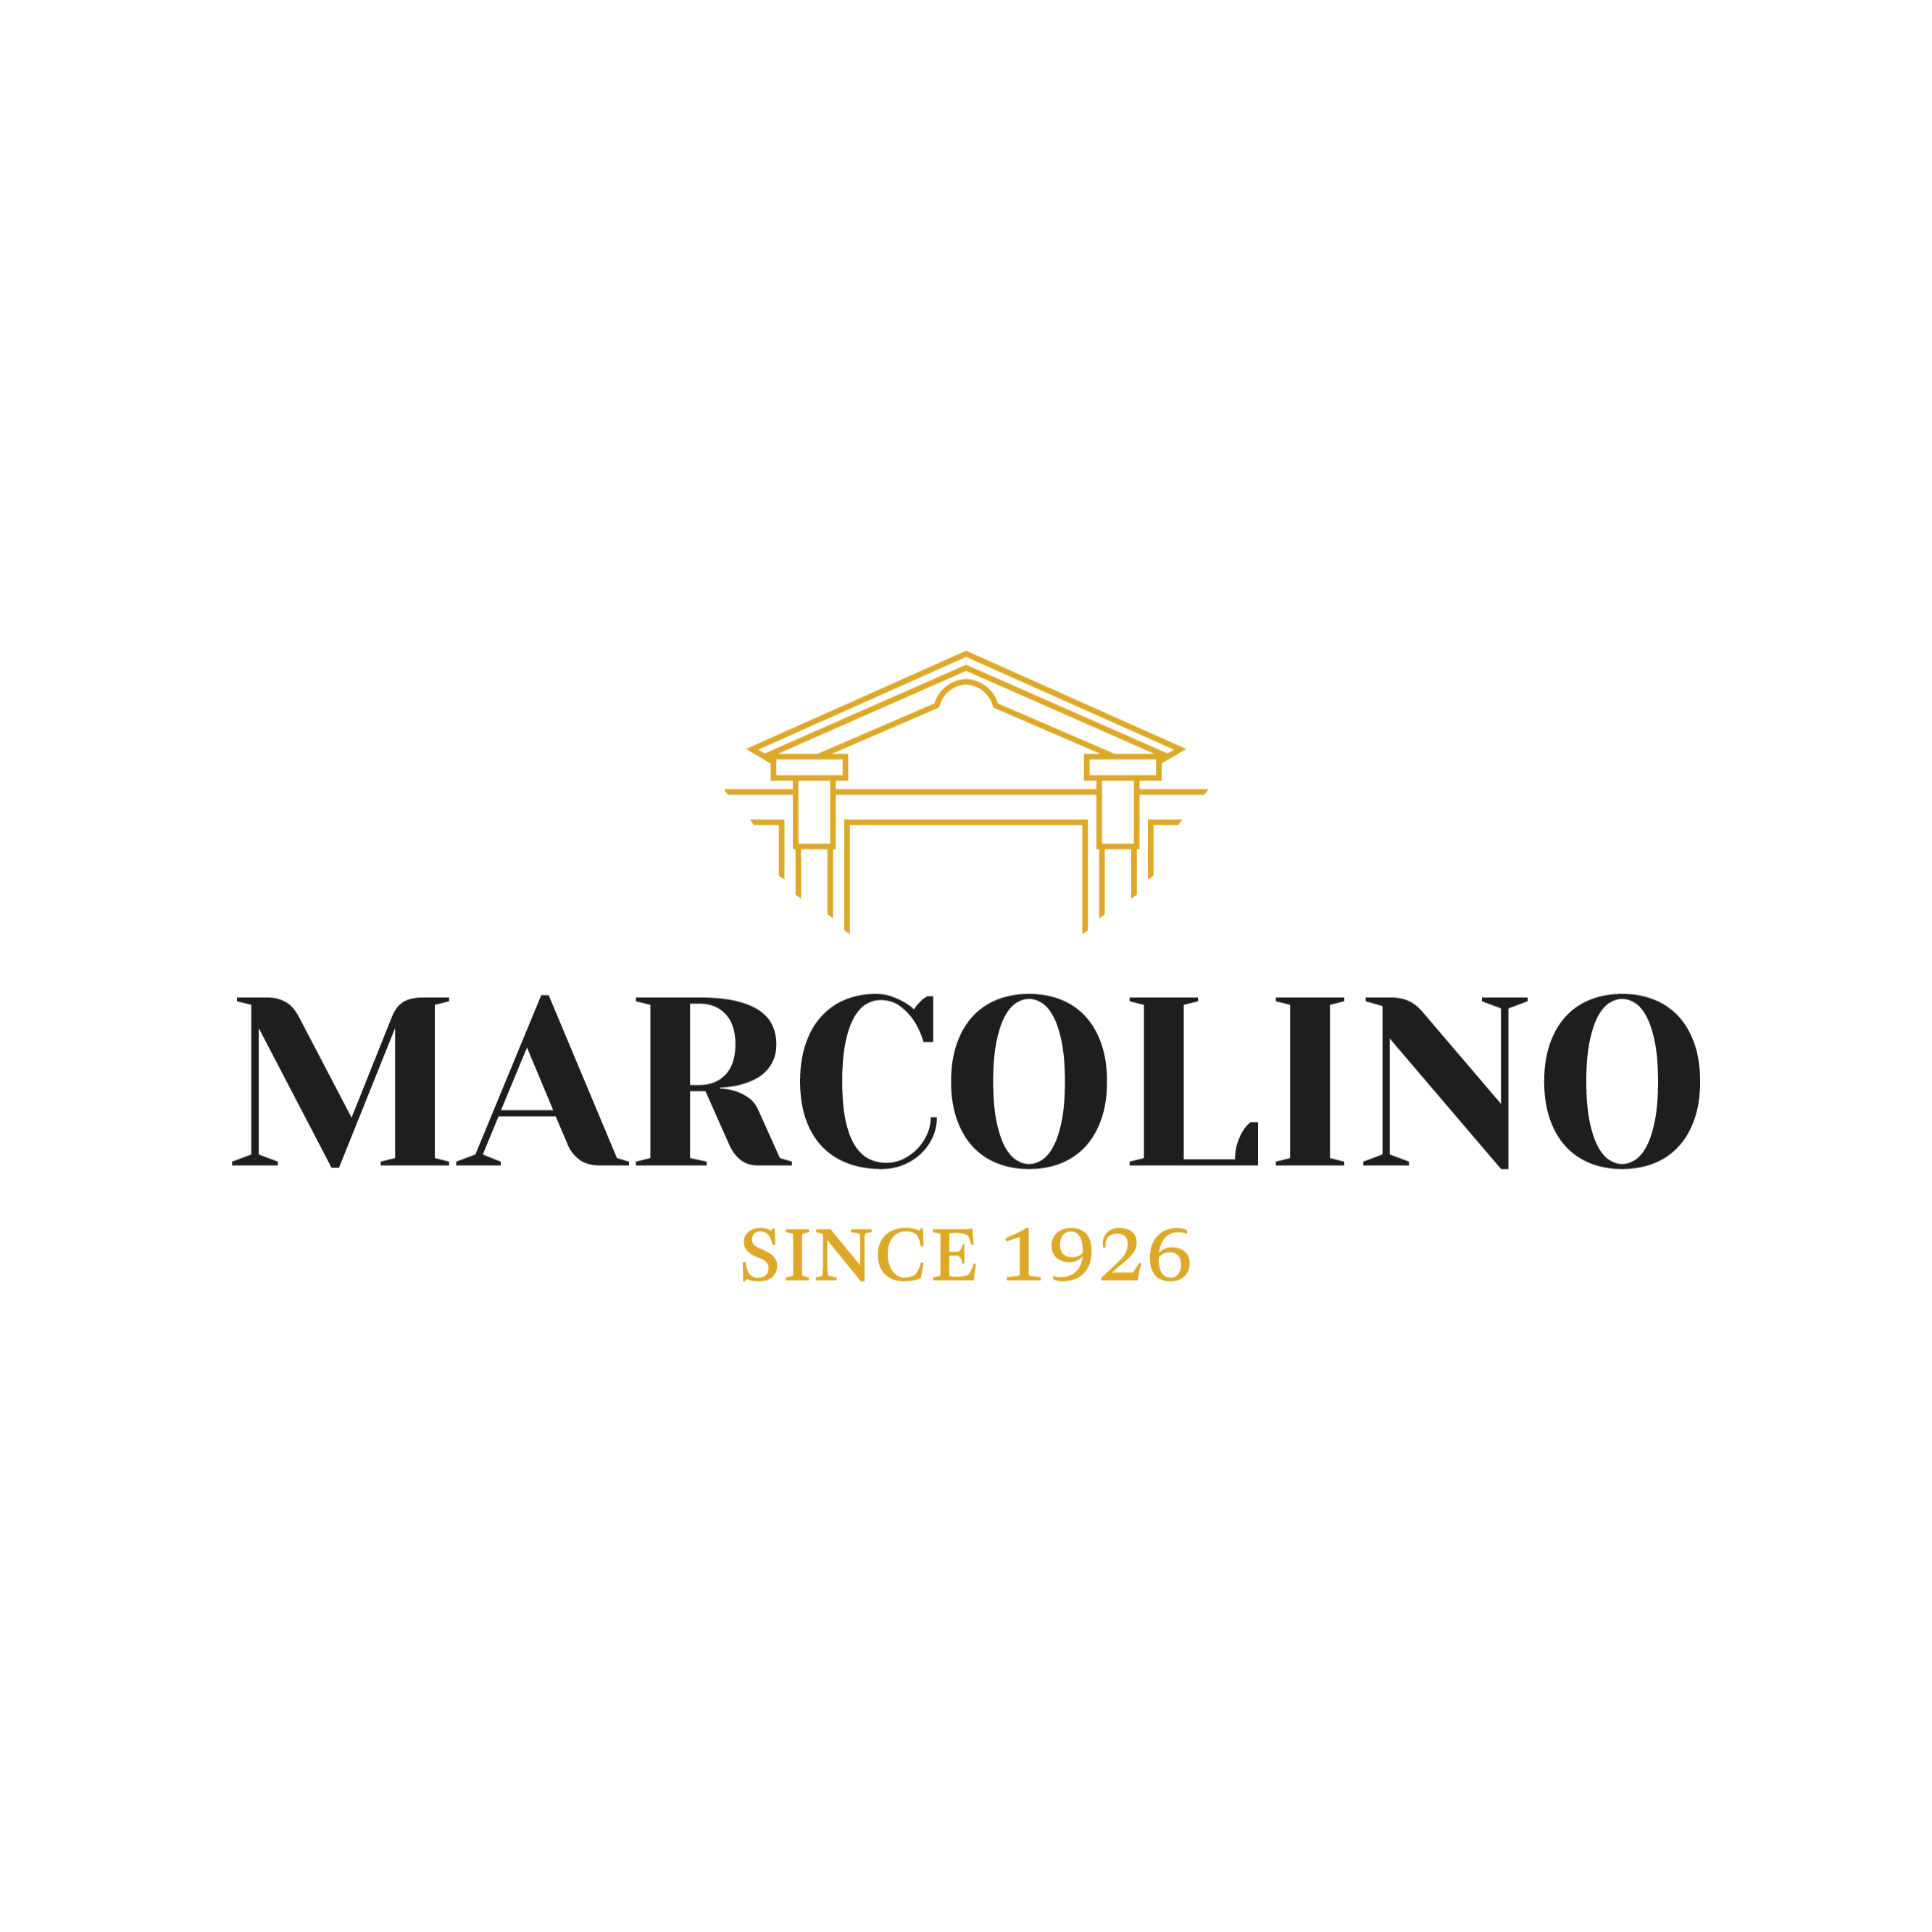 Marcolino - Rolex Official Retailer Logo